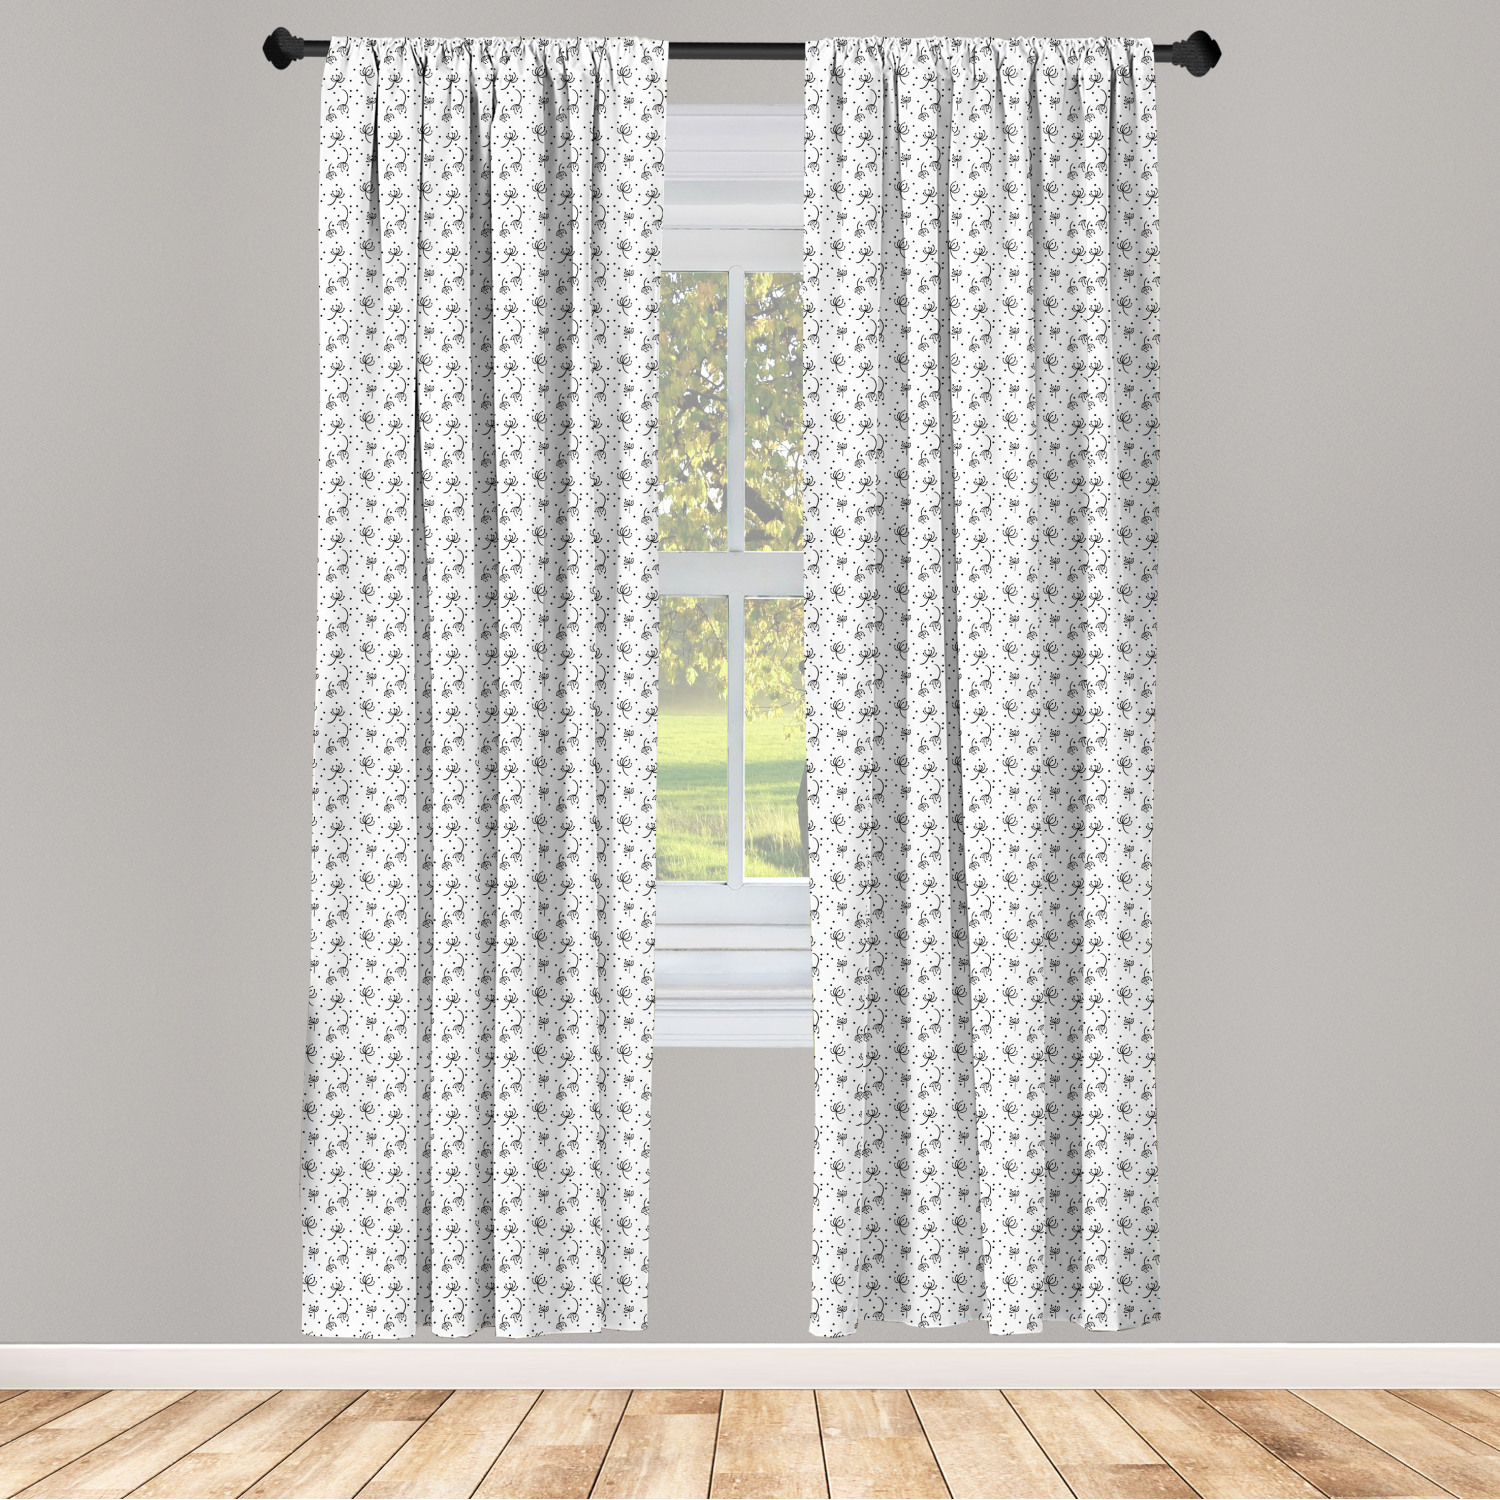 Black White Microfiber Curtains 2 Panel Set Living Room Bedroom in 3 Sizes